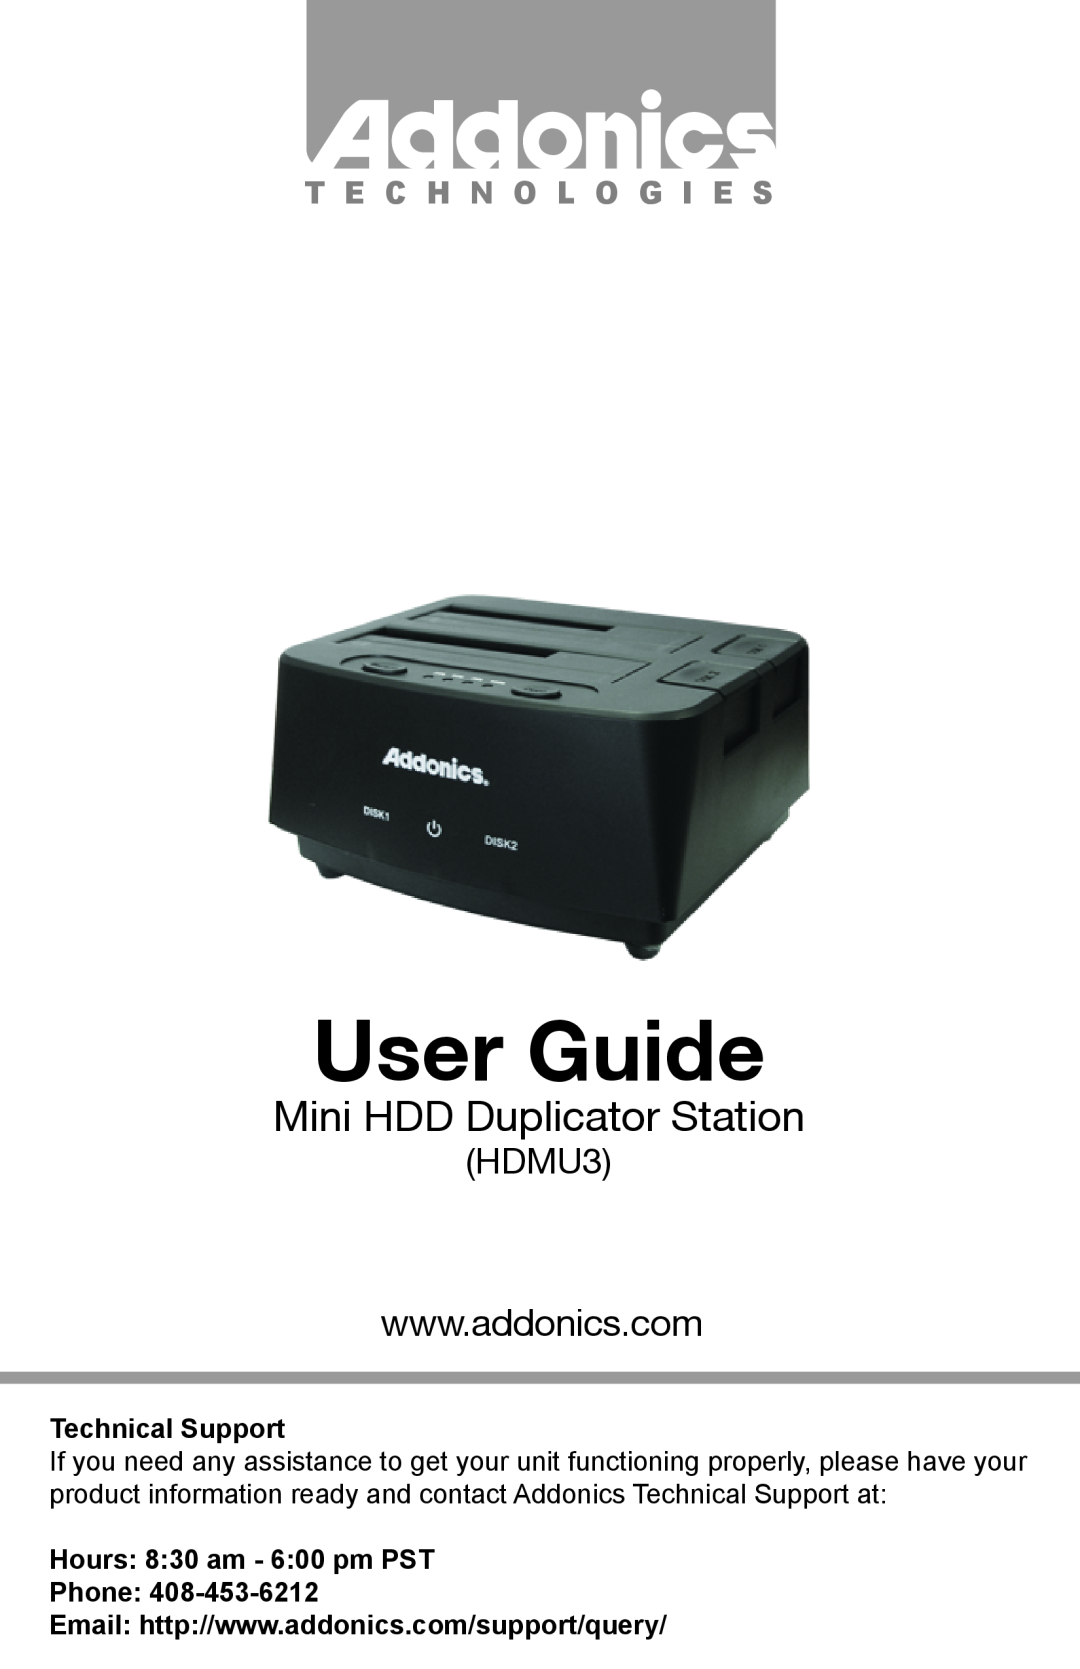 Addonics Technologies HDMU3 manual User Guide, Mini HDD Duplicator Station, T E C H N O L O G I E S, Technical Support 